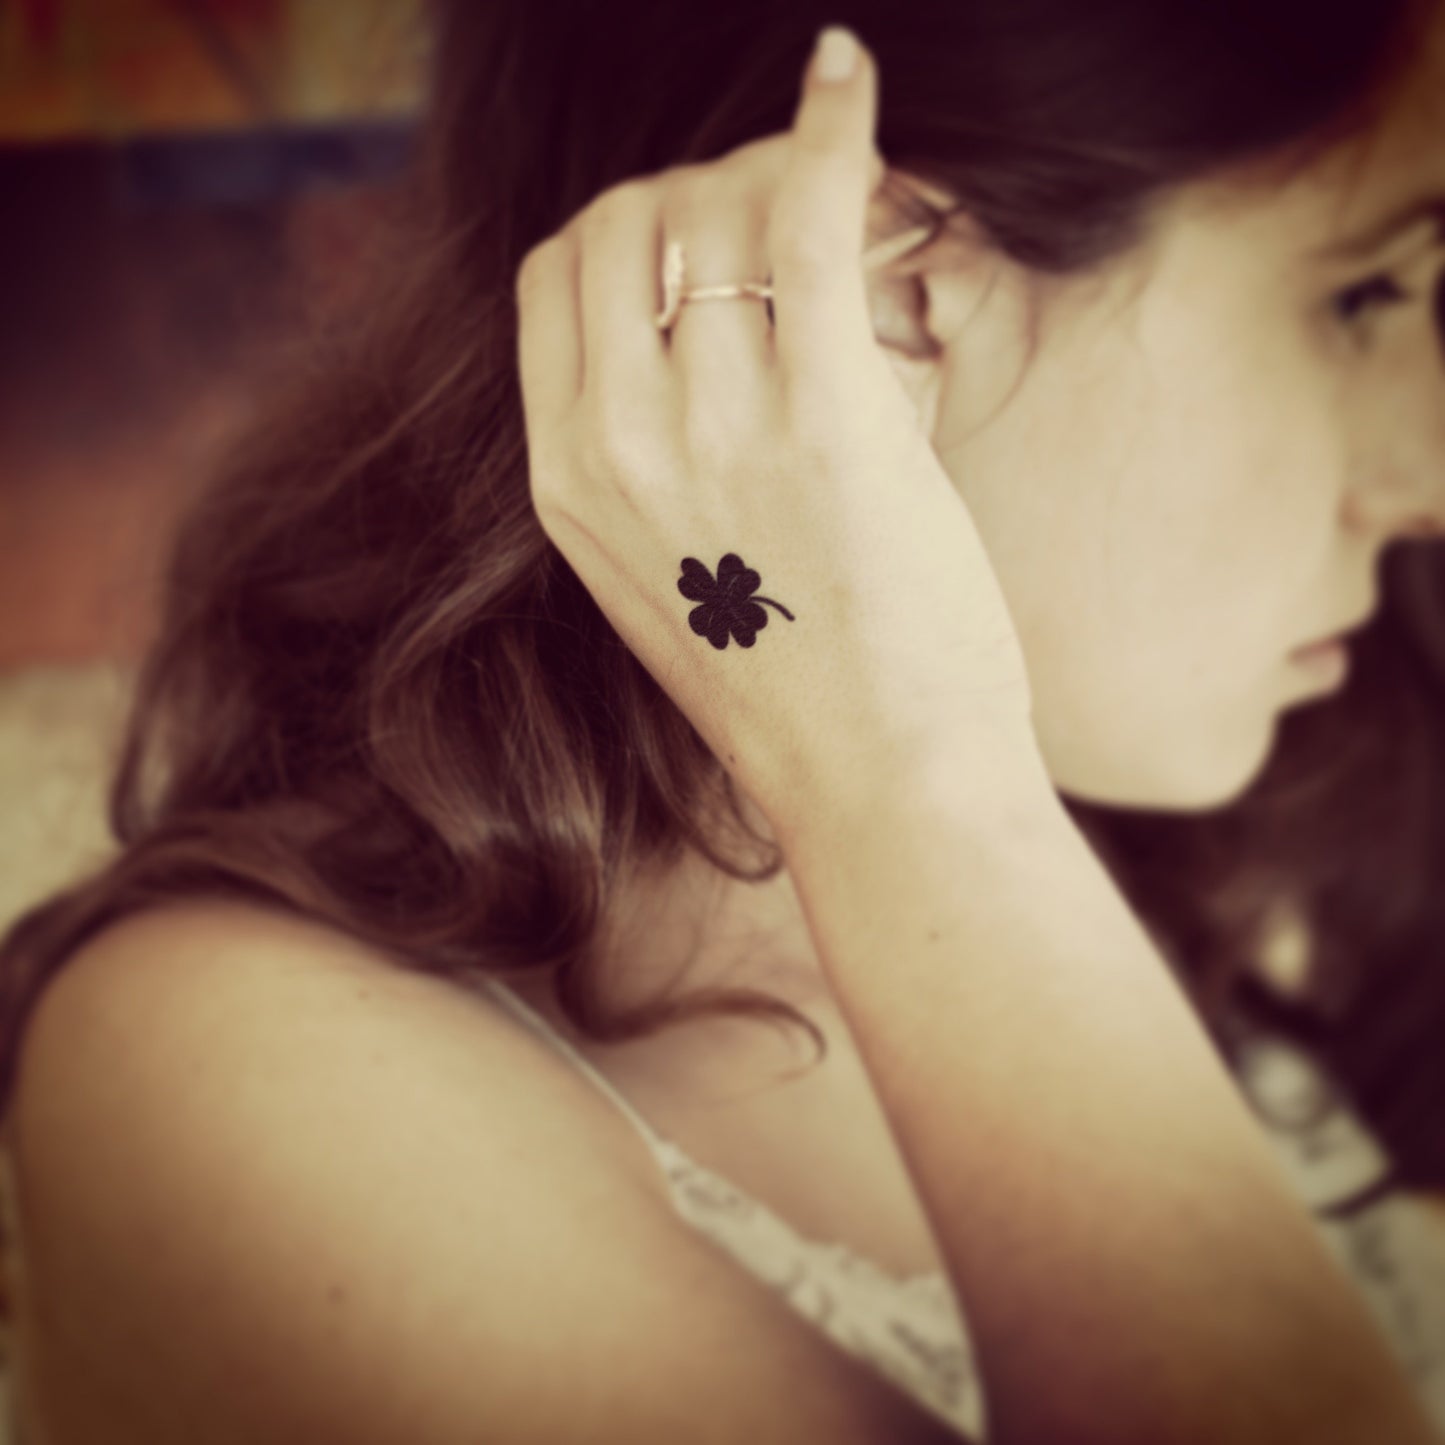 fake small black four leaf clover lucky charm shamrock minimalist temporary tattoo sticker design idea on wrist